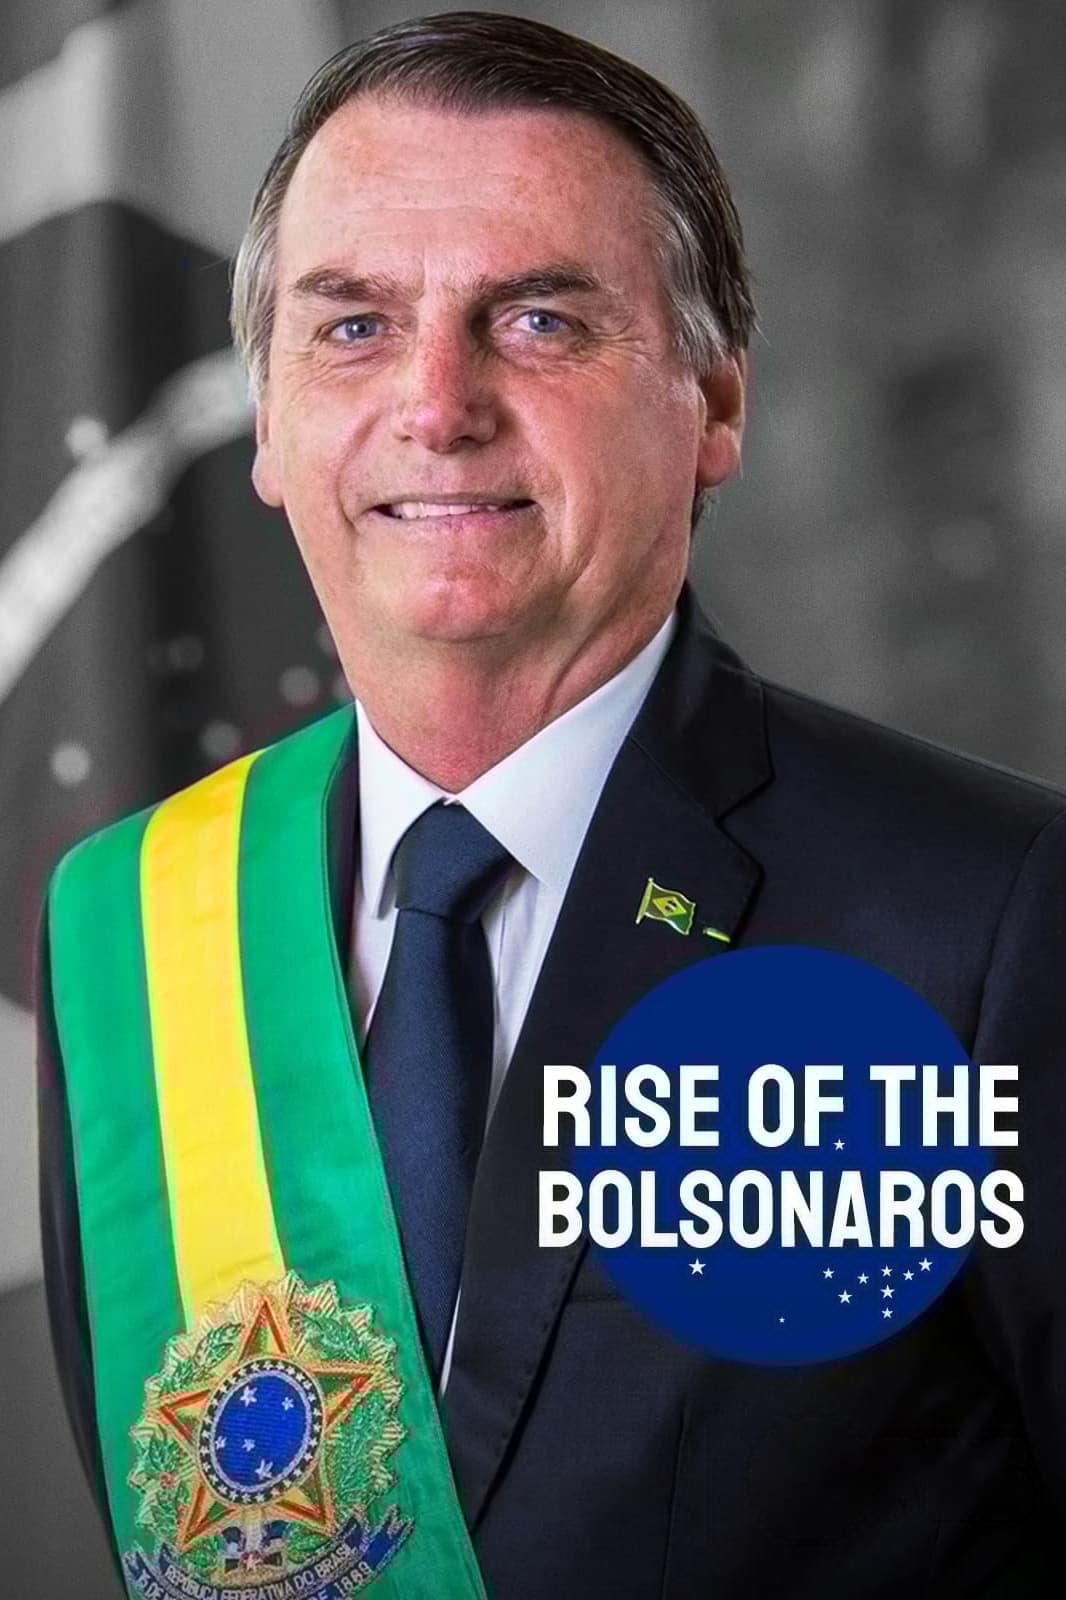 Rise of the Bolsonaros poster